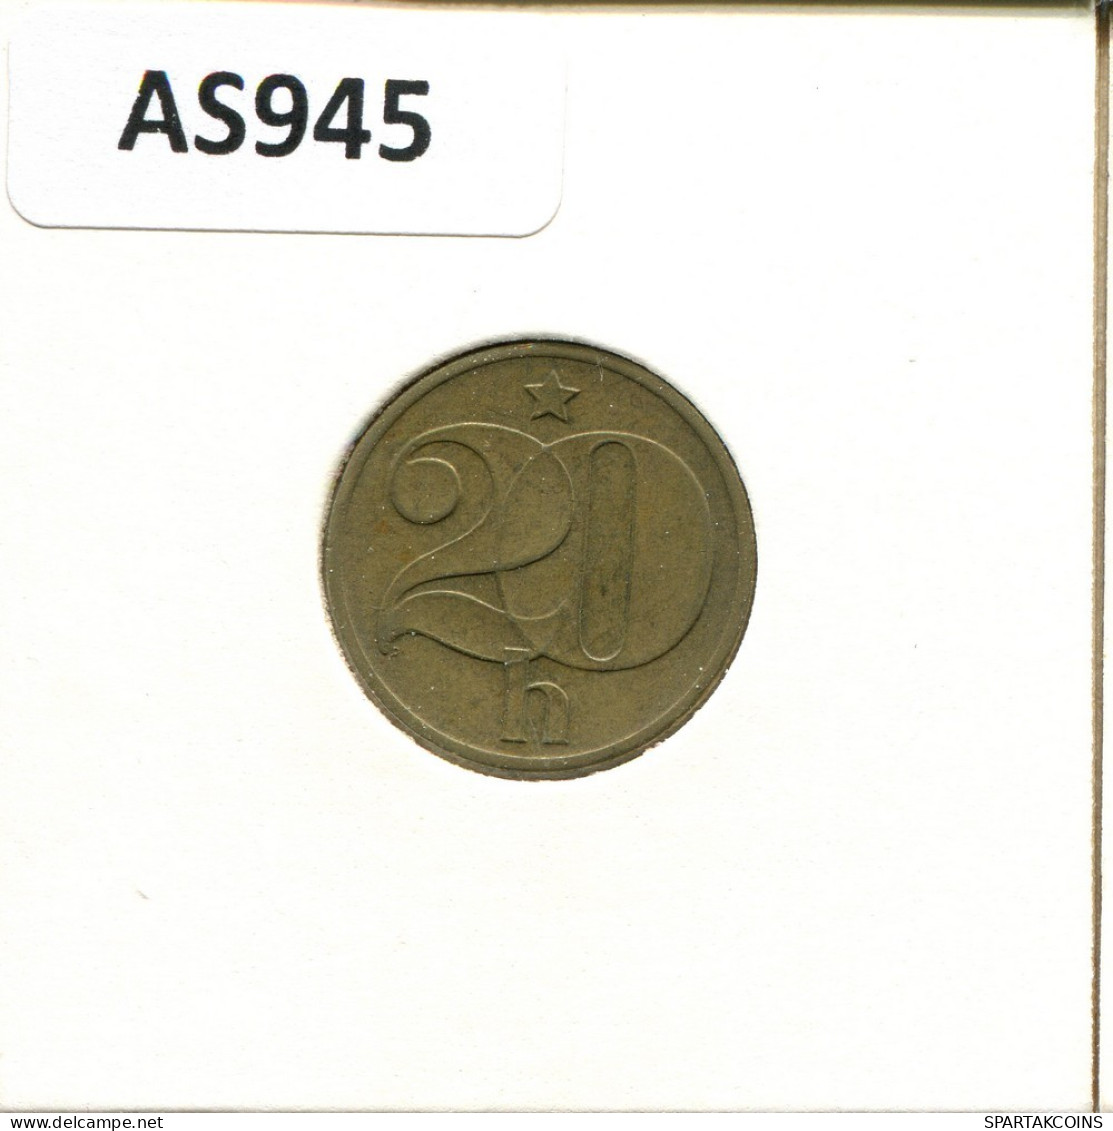 20 HALERU 1976 CZECHOSLOVAKIA Coin #AS945.U.A - Cecoslovacchia